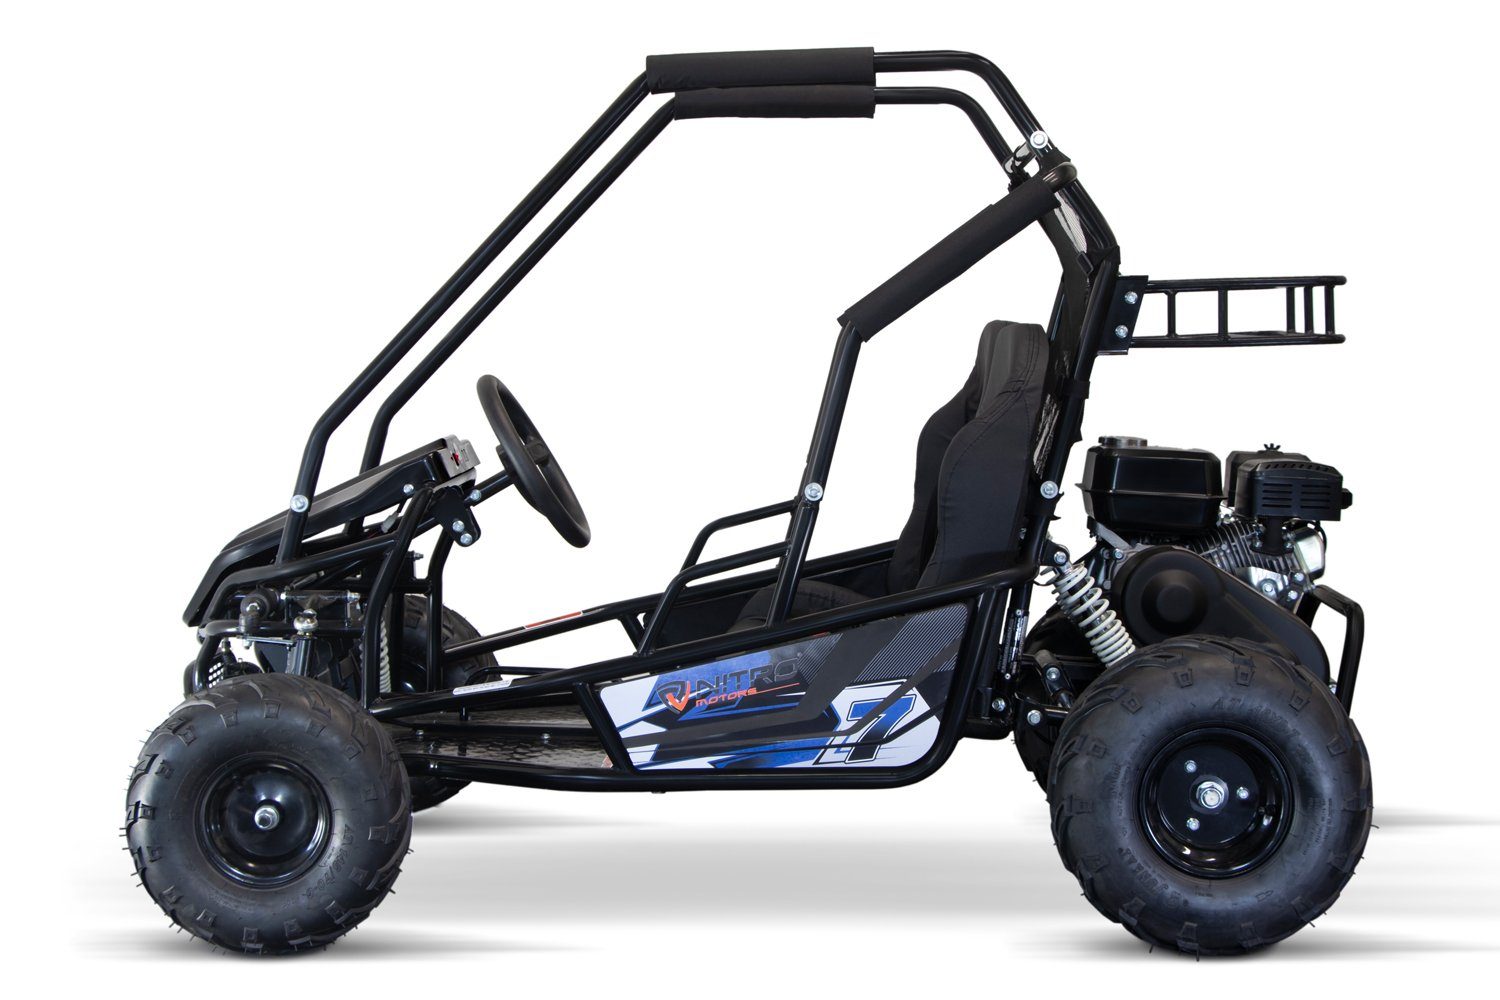 Nitro Motors Quad Kinder Forest midi 212cc Gokart Buggy ccm ATV, PRM Quad Automatik Blau 212,00